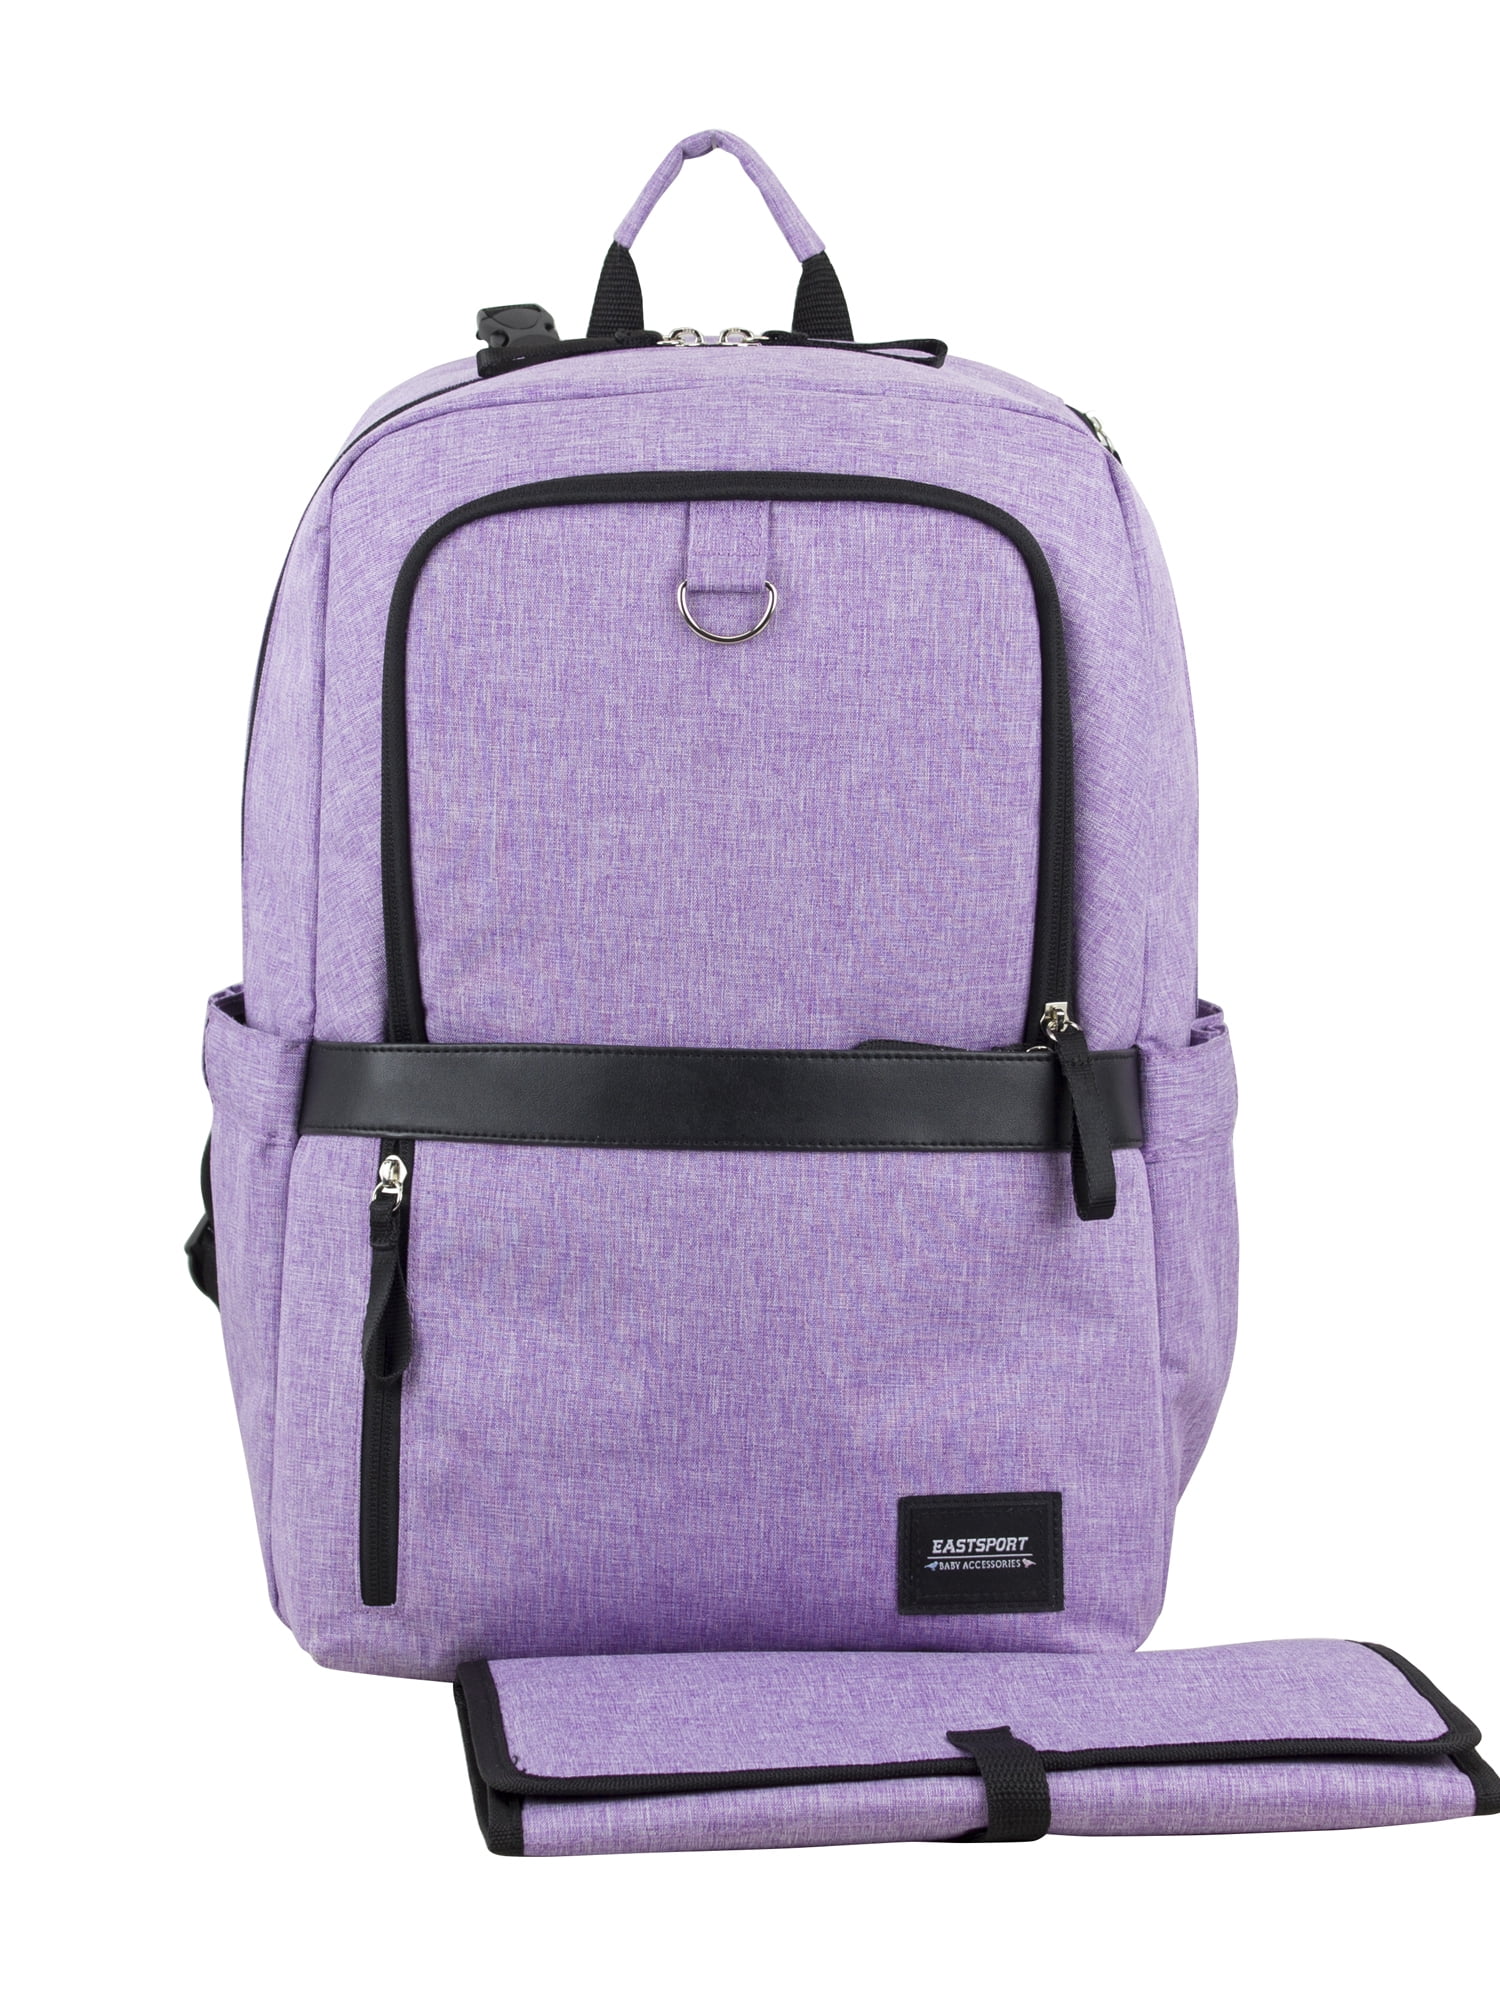 TSbag Backpack for Sale by pbarts